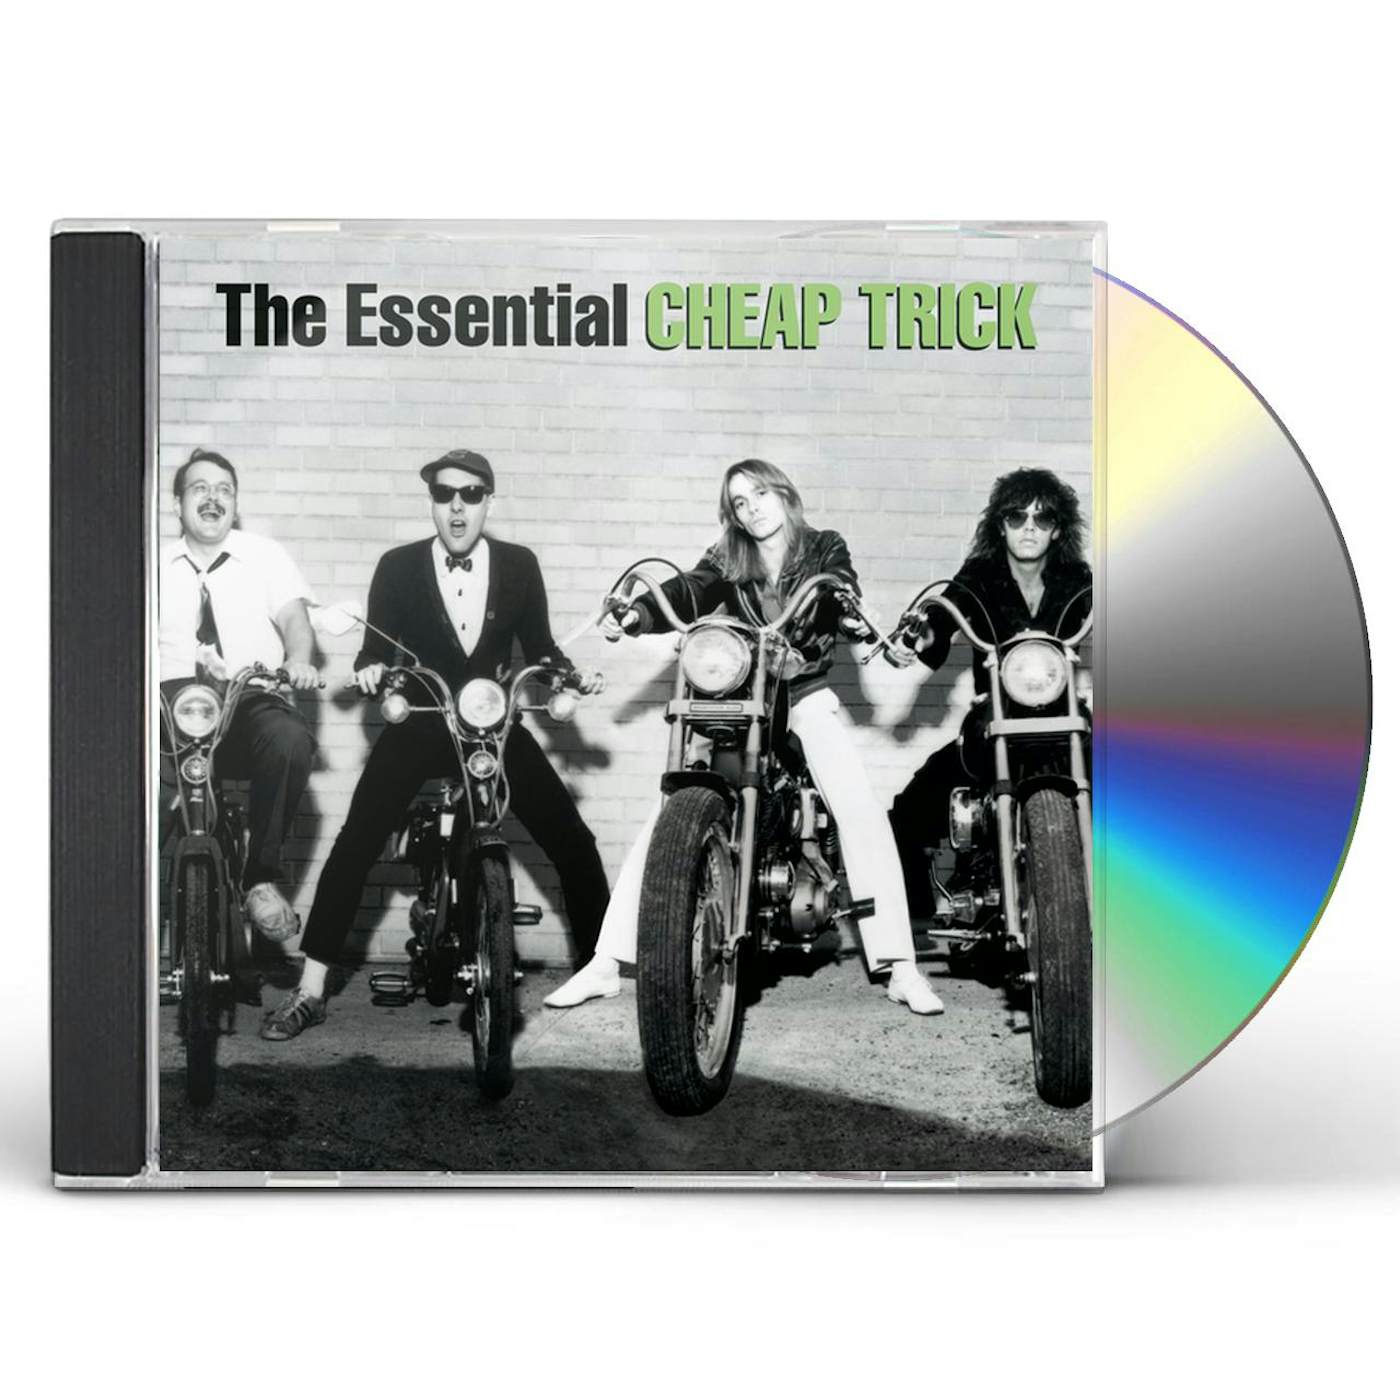 ESSENTIAL CHEAP TRICK CD